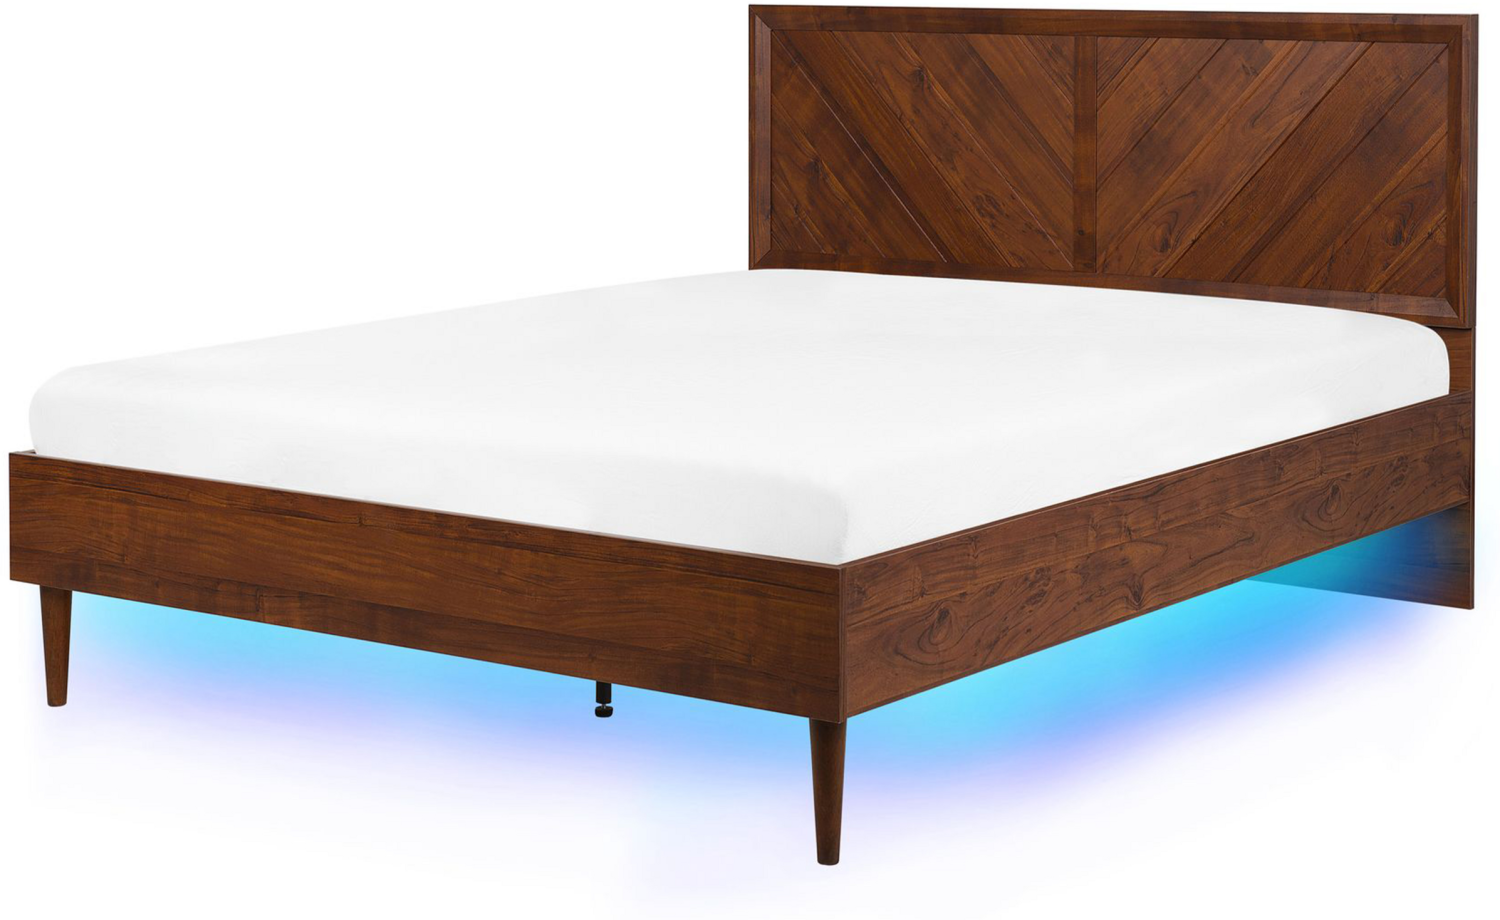 Bett dunkler Holzfarbton 140 x 200 cm mit LED-Beleuchtung bunt MIALET Bild 1